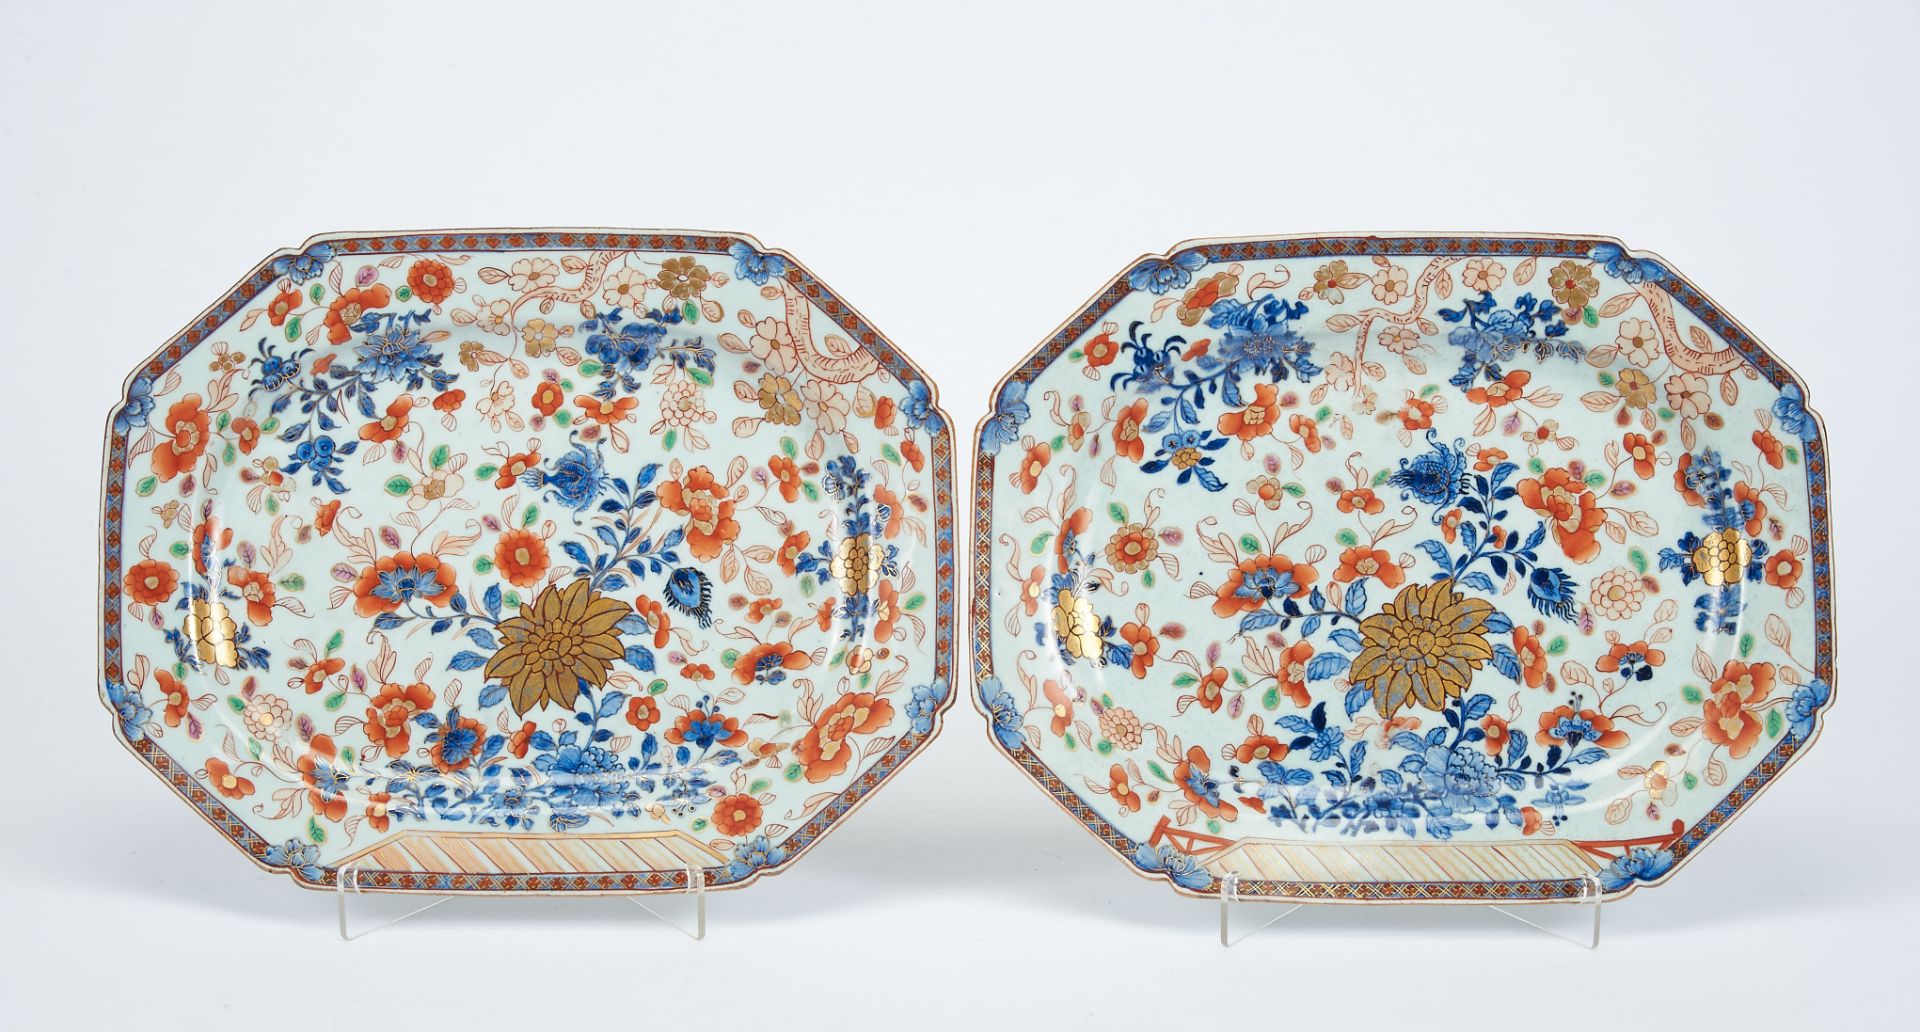 A Pair of Large Octagonal Platters, Chinese export porcelain, blue and rouge-de-fer decoration "